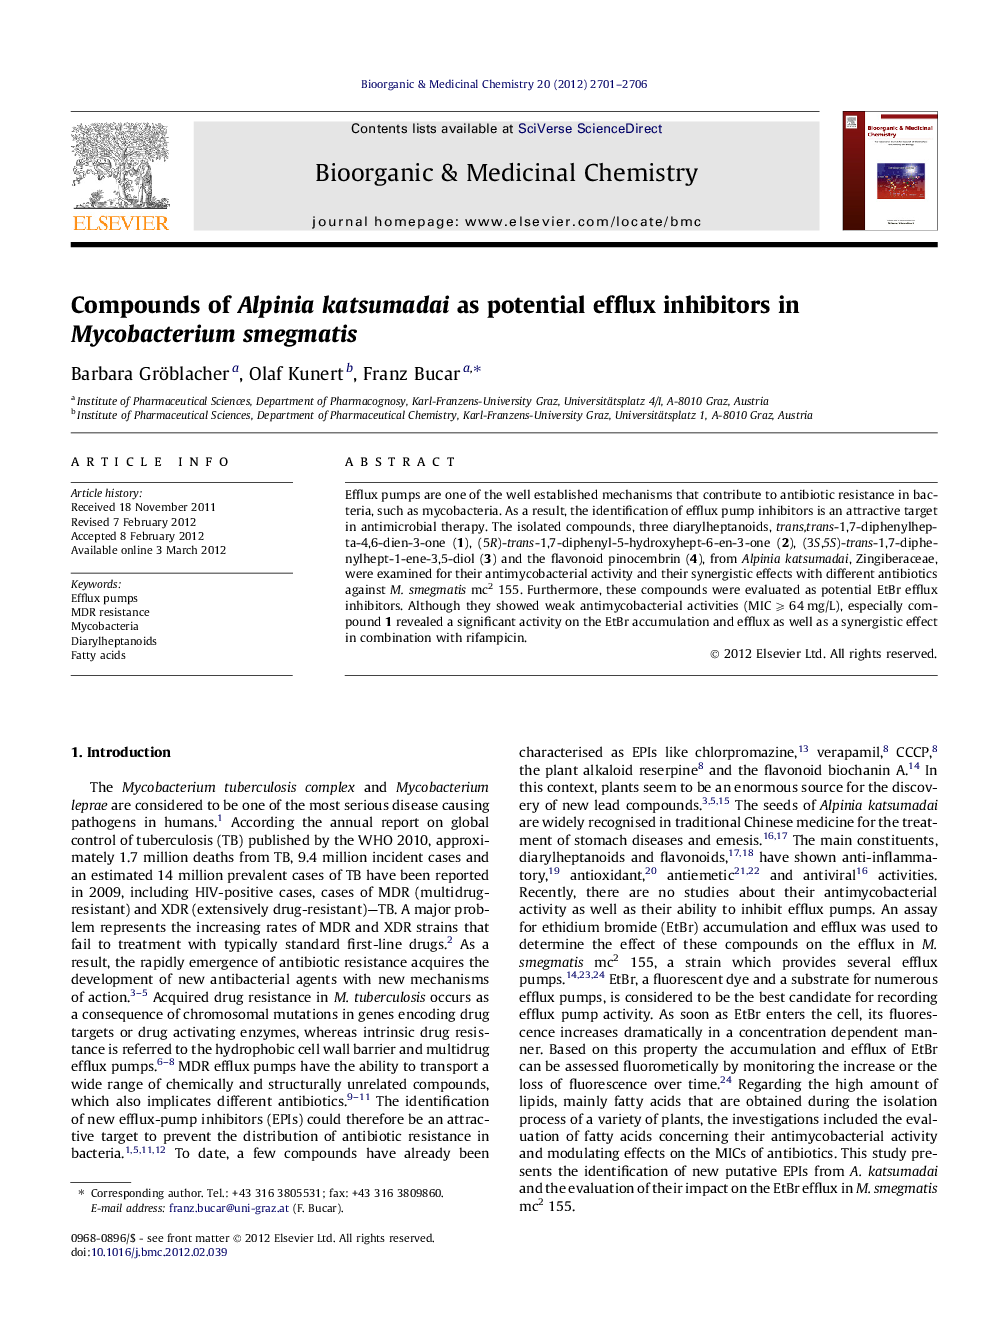 Compounds of Alpinia katsumadai as potential efflux inhibitors in Mycobacterium smegmatis